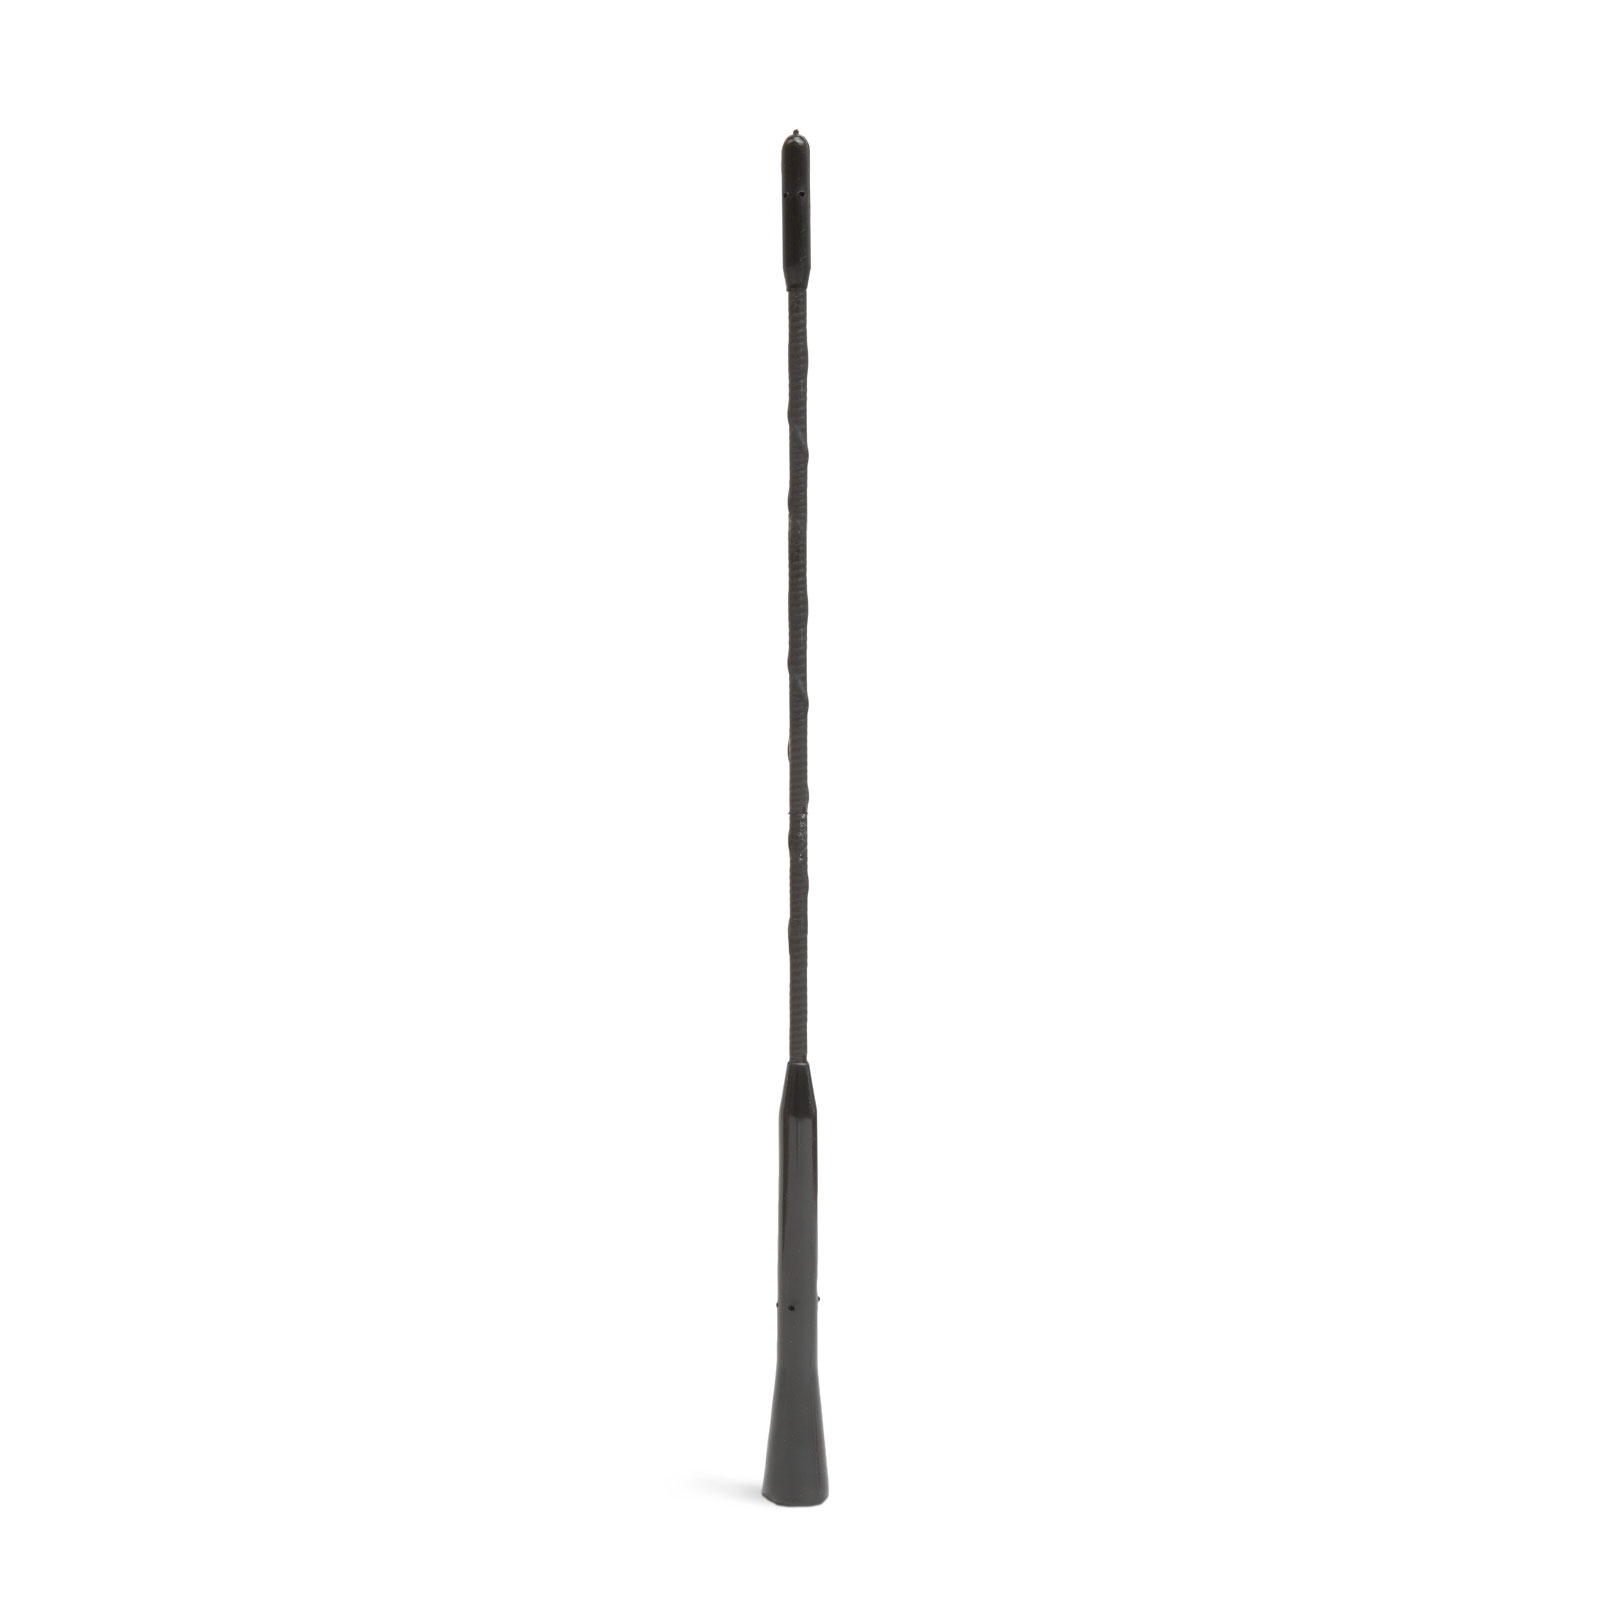 Univaersal antenna shaft - 36 cm thumb